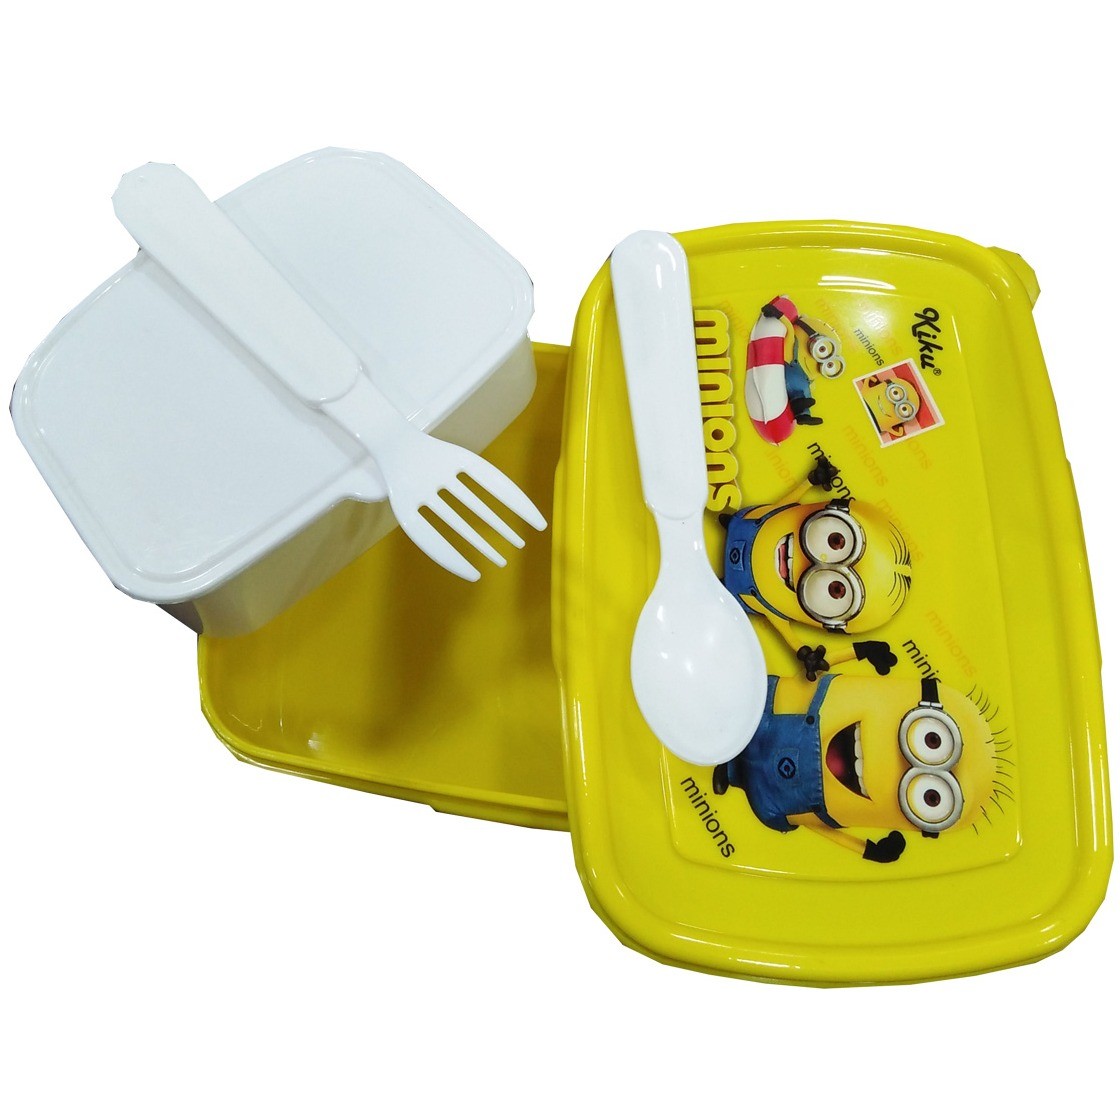 Kiku Minions Themed Lunch Box for Kids - Yellow